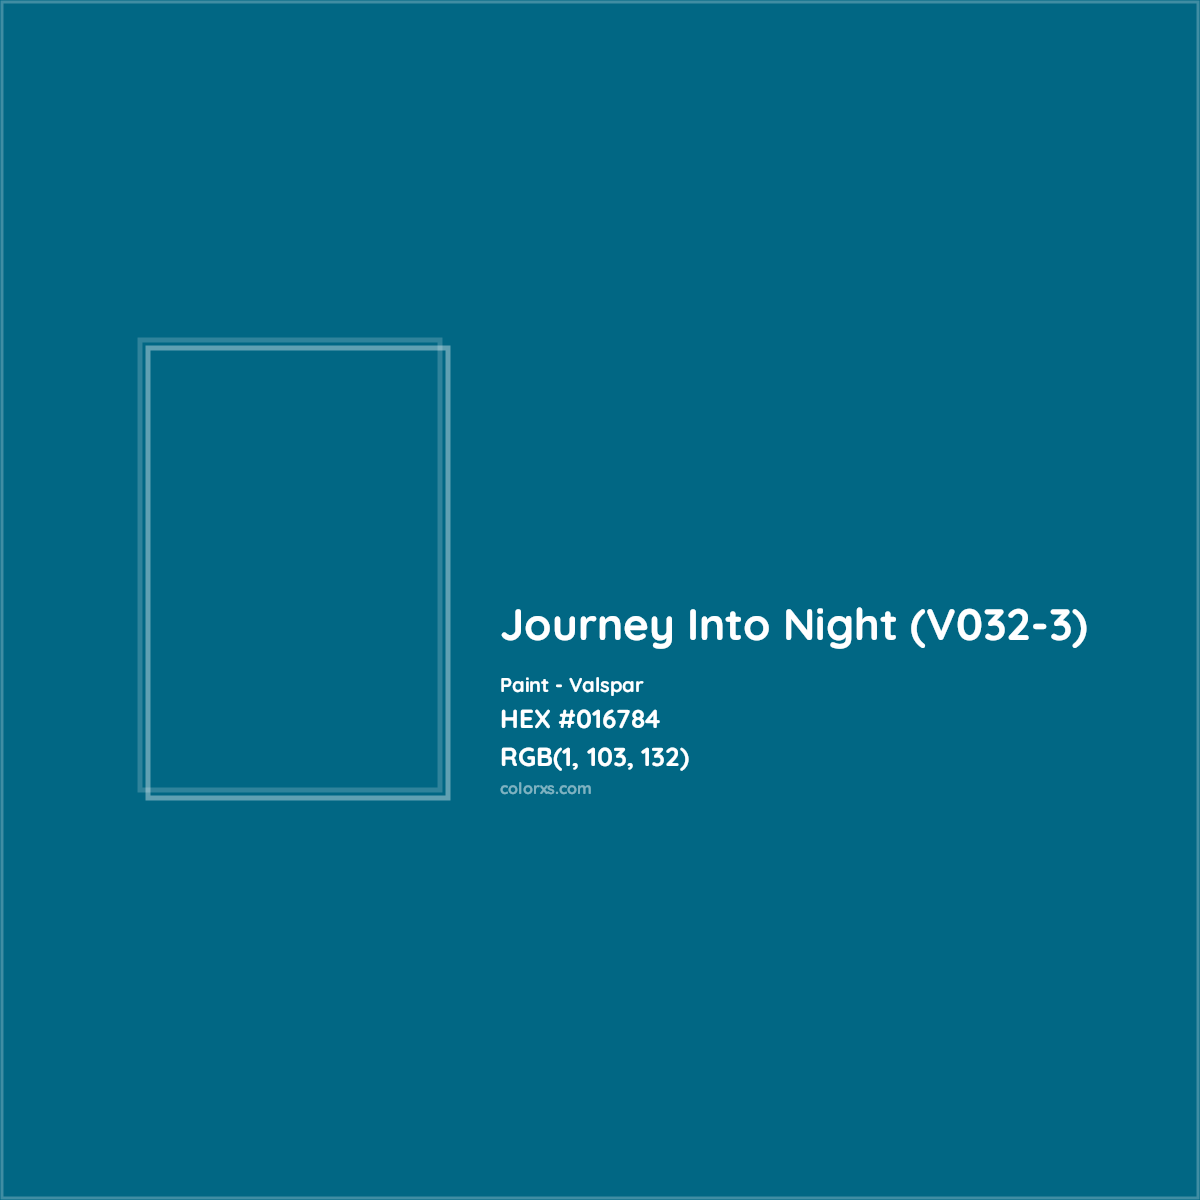 HEX #016784 Journey Into Night (V032-3) Paint Valspar - Color Code